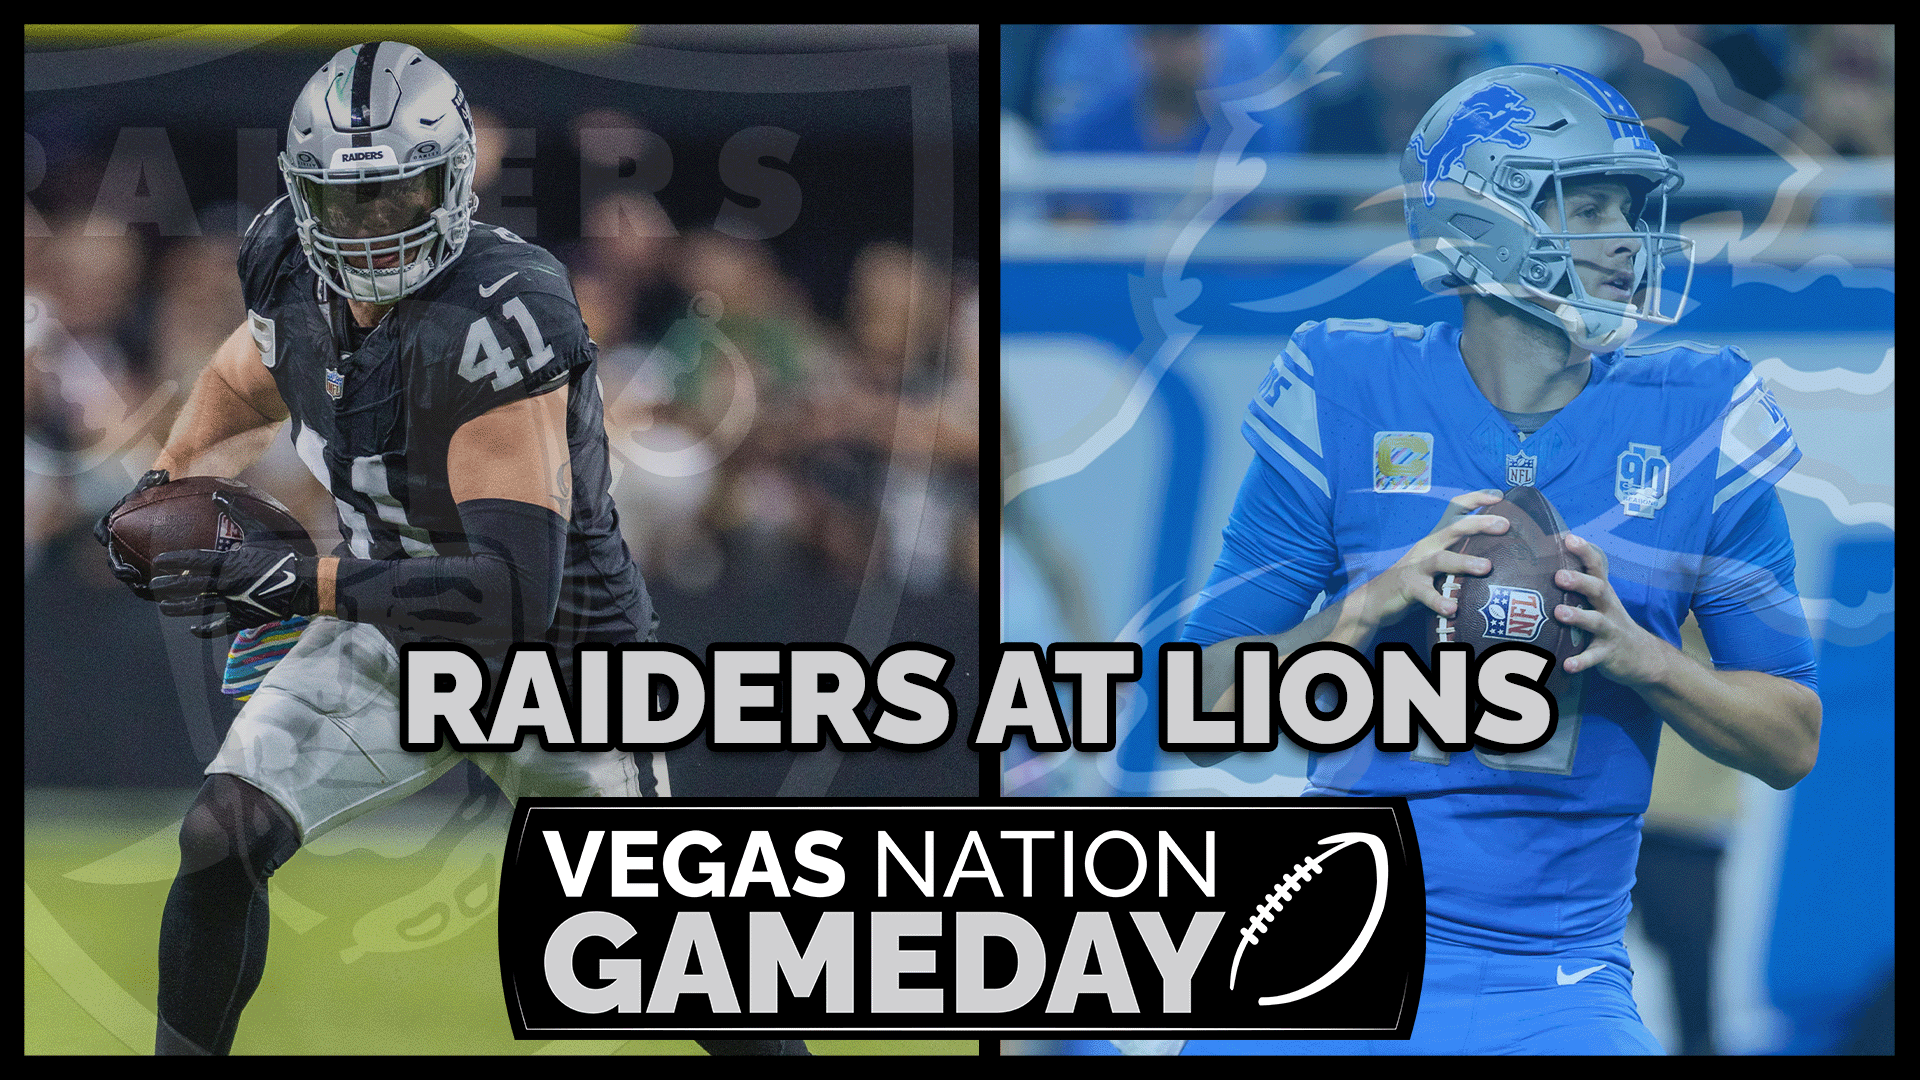 Las Vegas Raiders visit Lions before NFL trade deadline